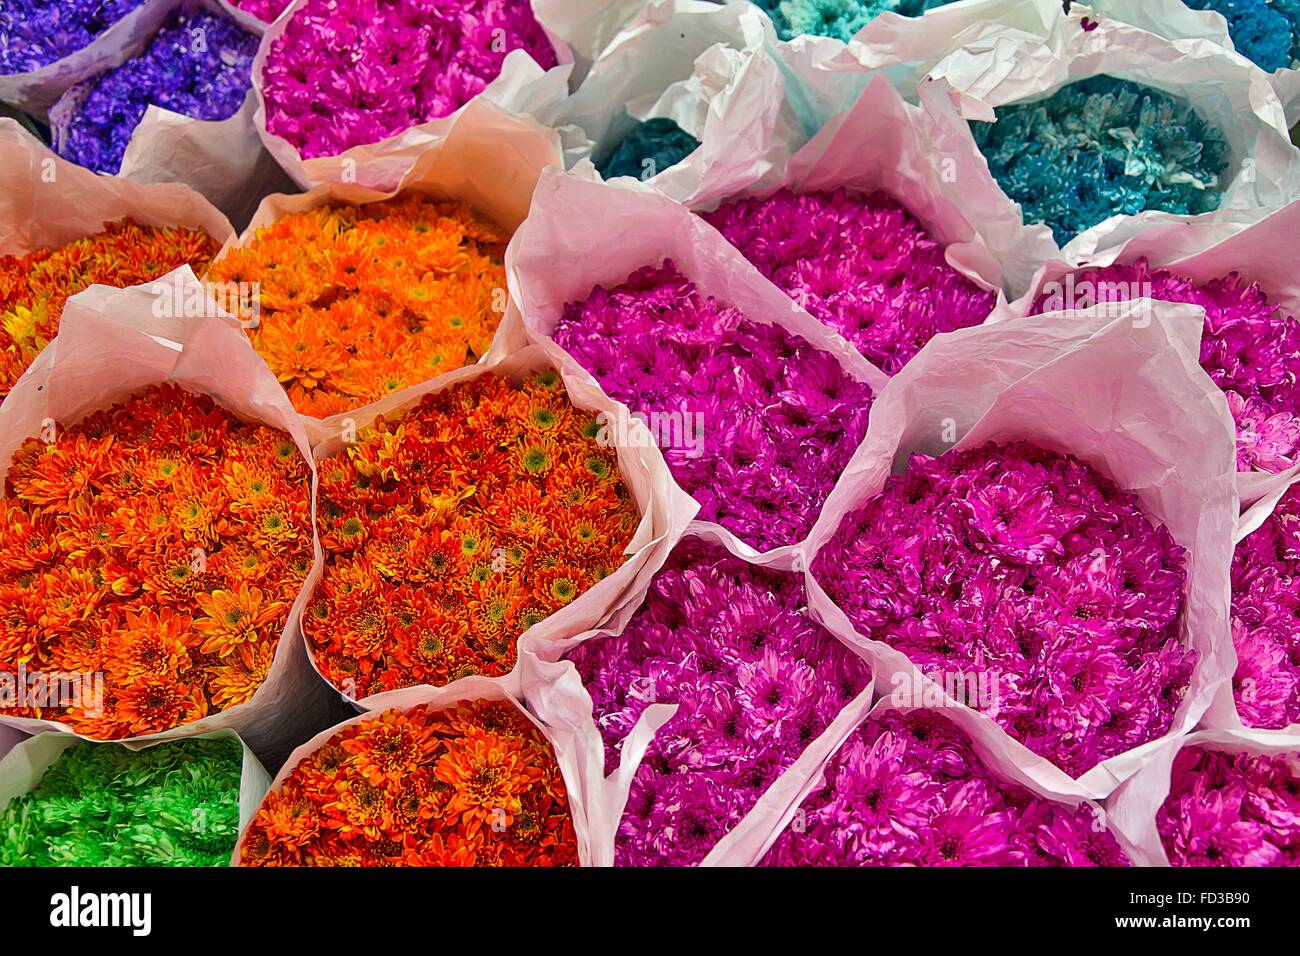 At a flower market in Bangkok, Thailand Stock Photo